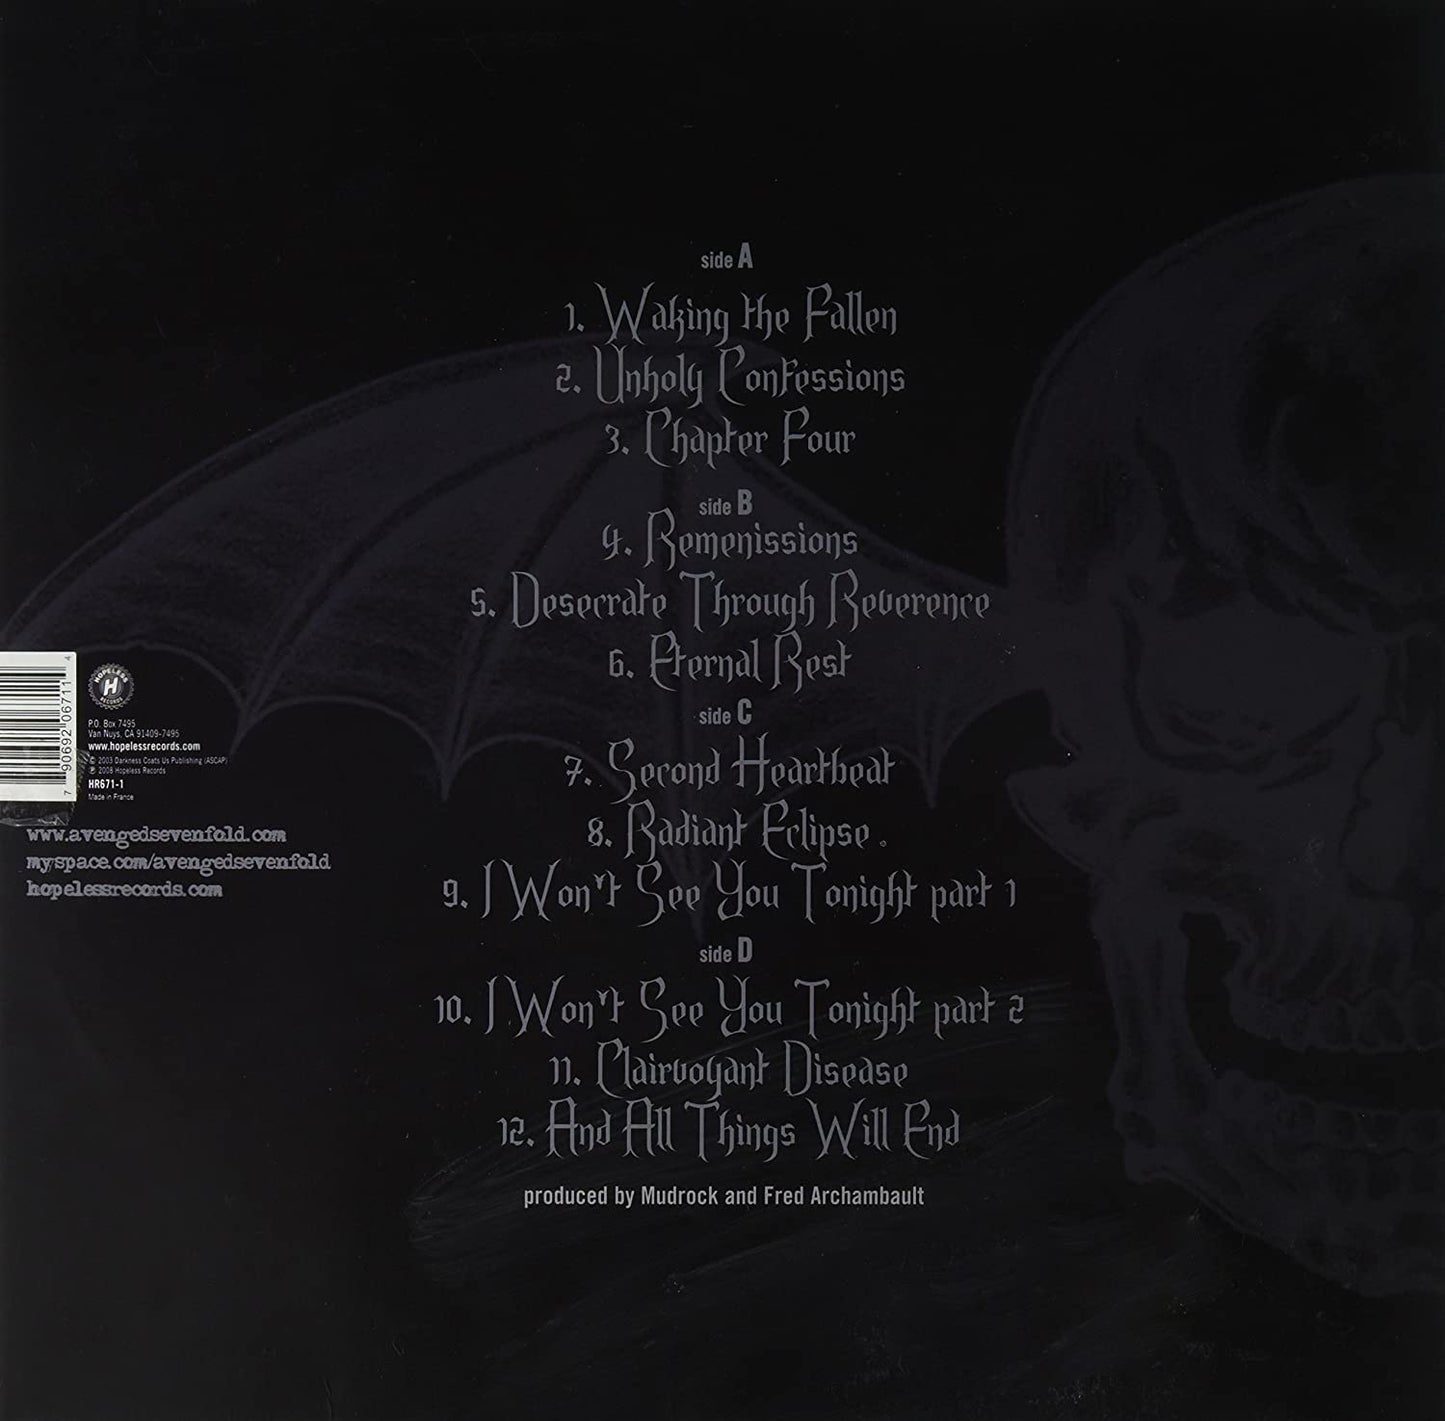 Avenged Sevenfold/Waking The Fallen [LP]